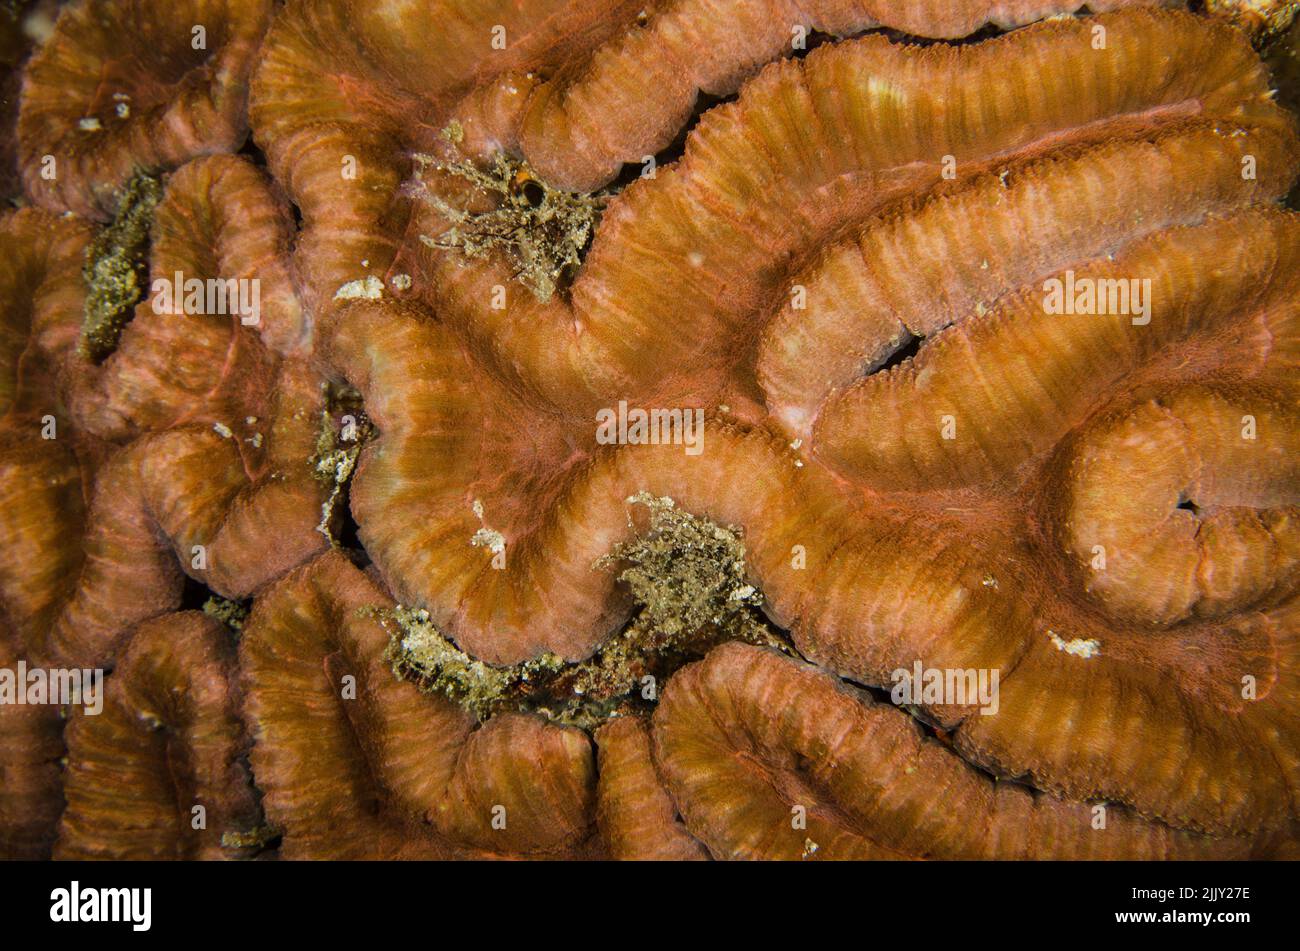 Coral pedregoso, Lobophyllia hemprichii, Mussidae, Anilao, Batangas, Filipinas, Océano Indo-pacífico, Asia Foto de stock